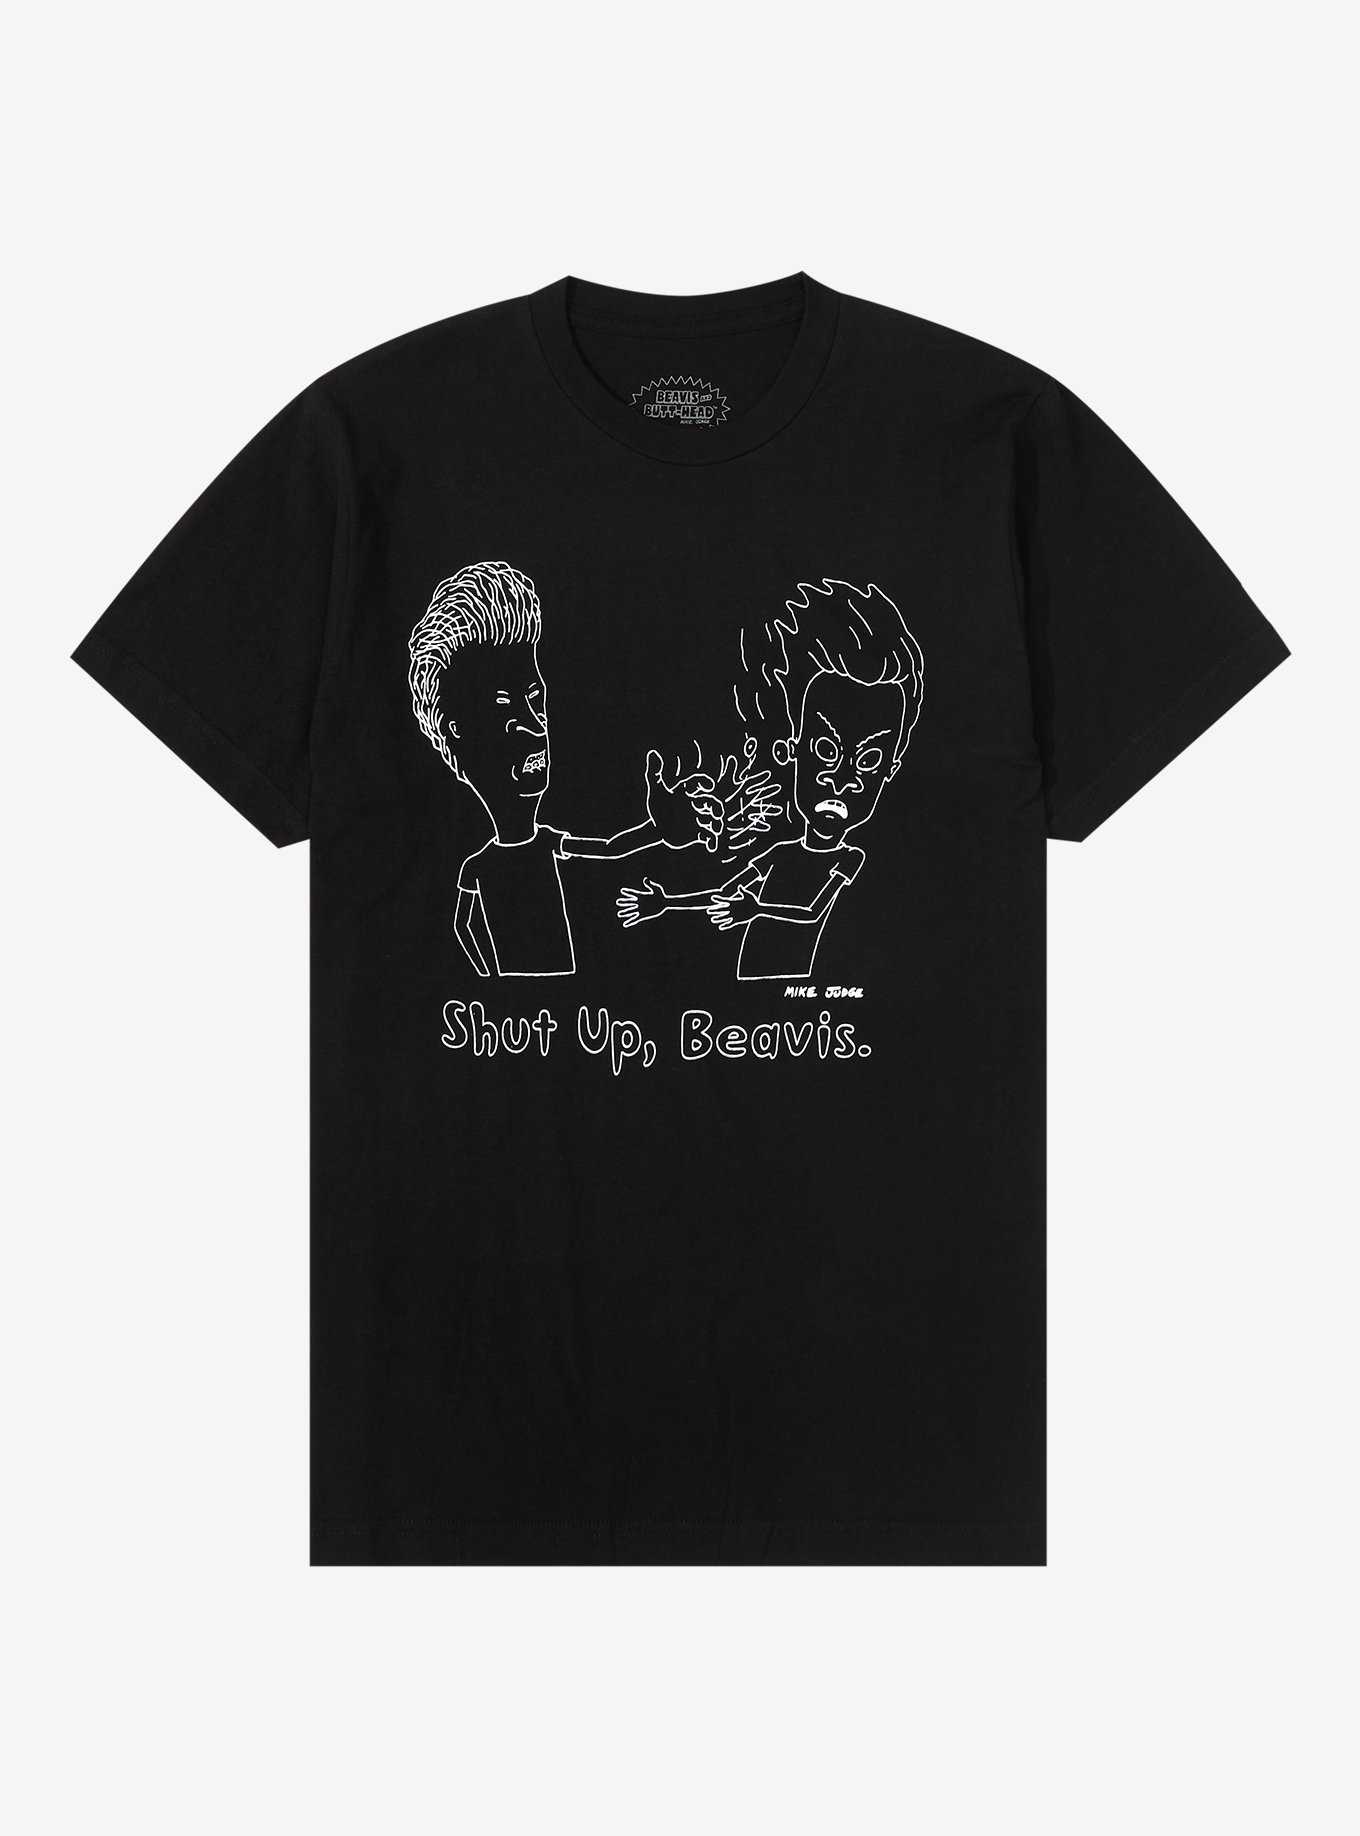 Beavis And Butt-Head Duo T-Shirt, , hi-res